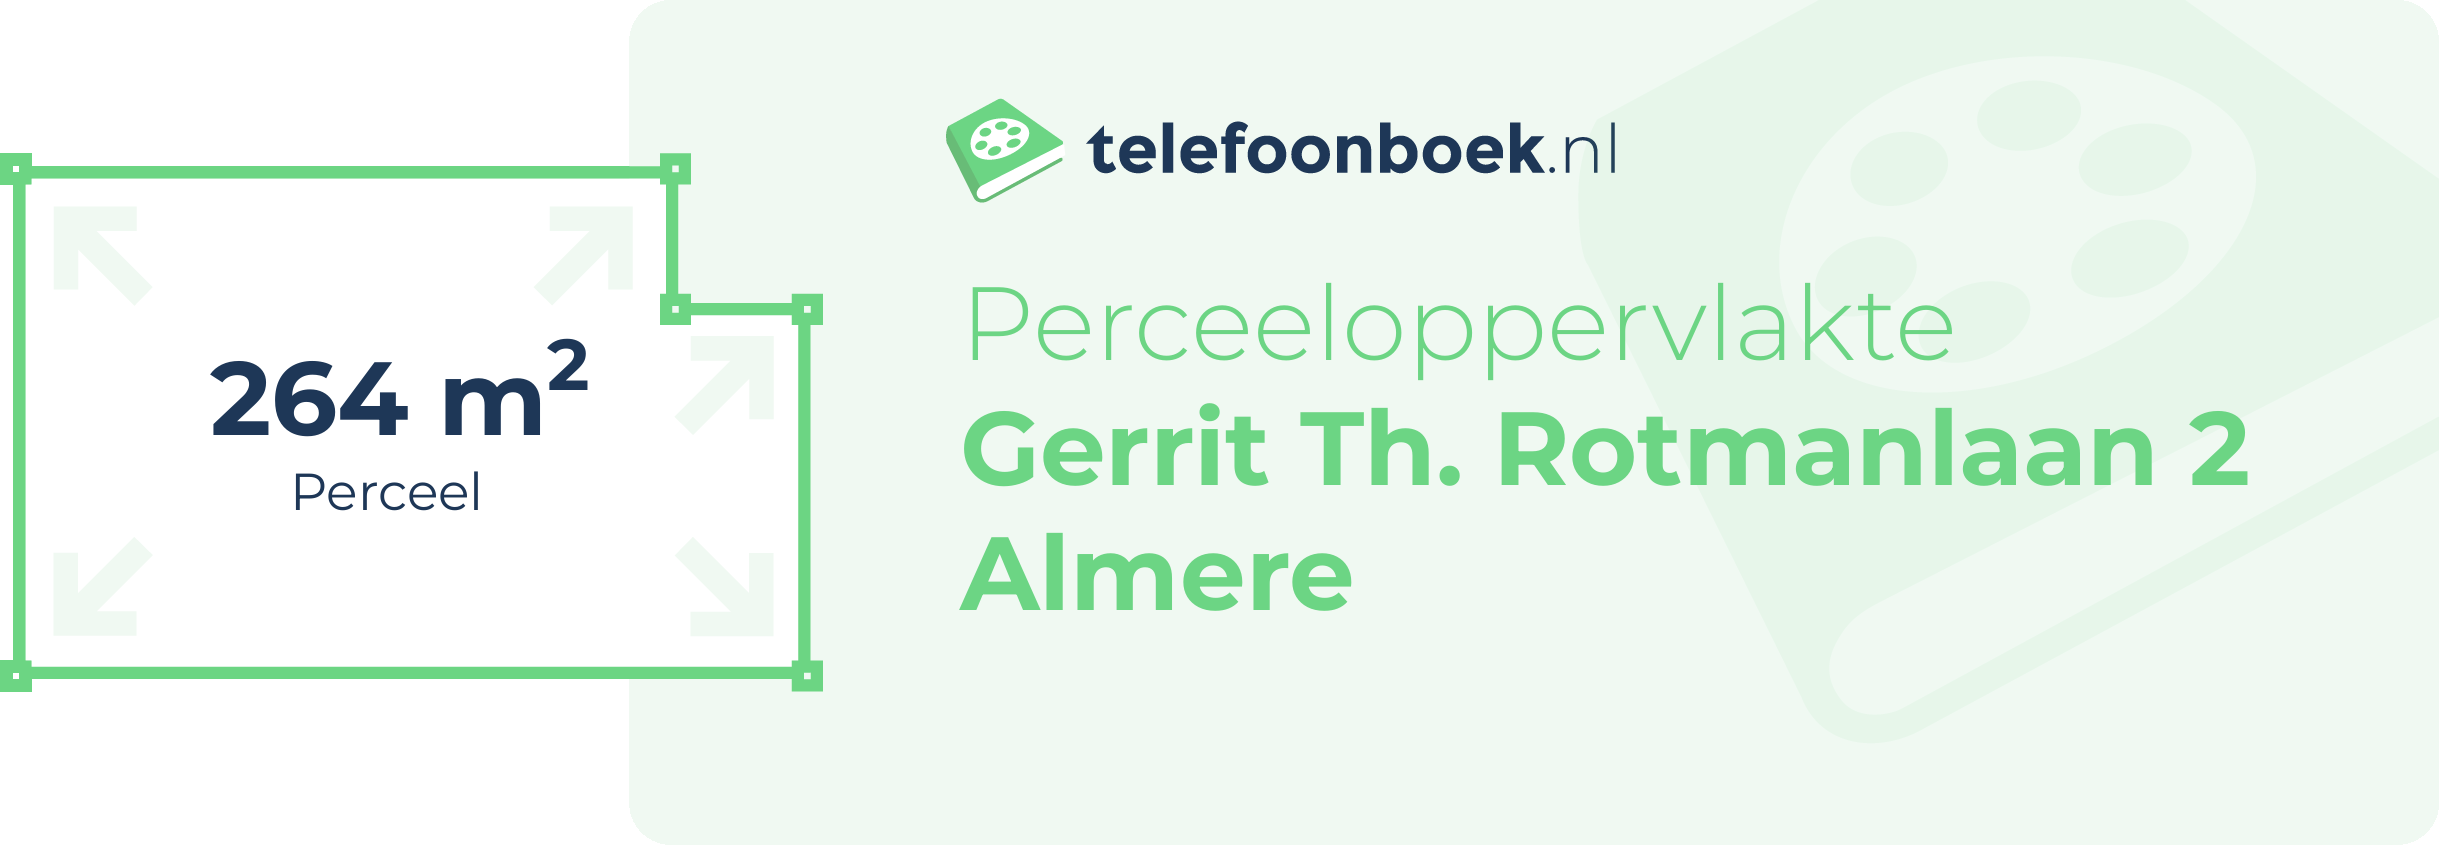 Perceeloppervlakte Gerrit Th. Rotmanlaan 2 Almere